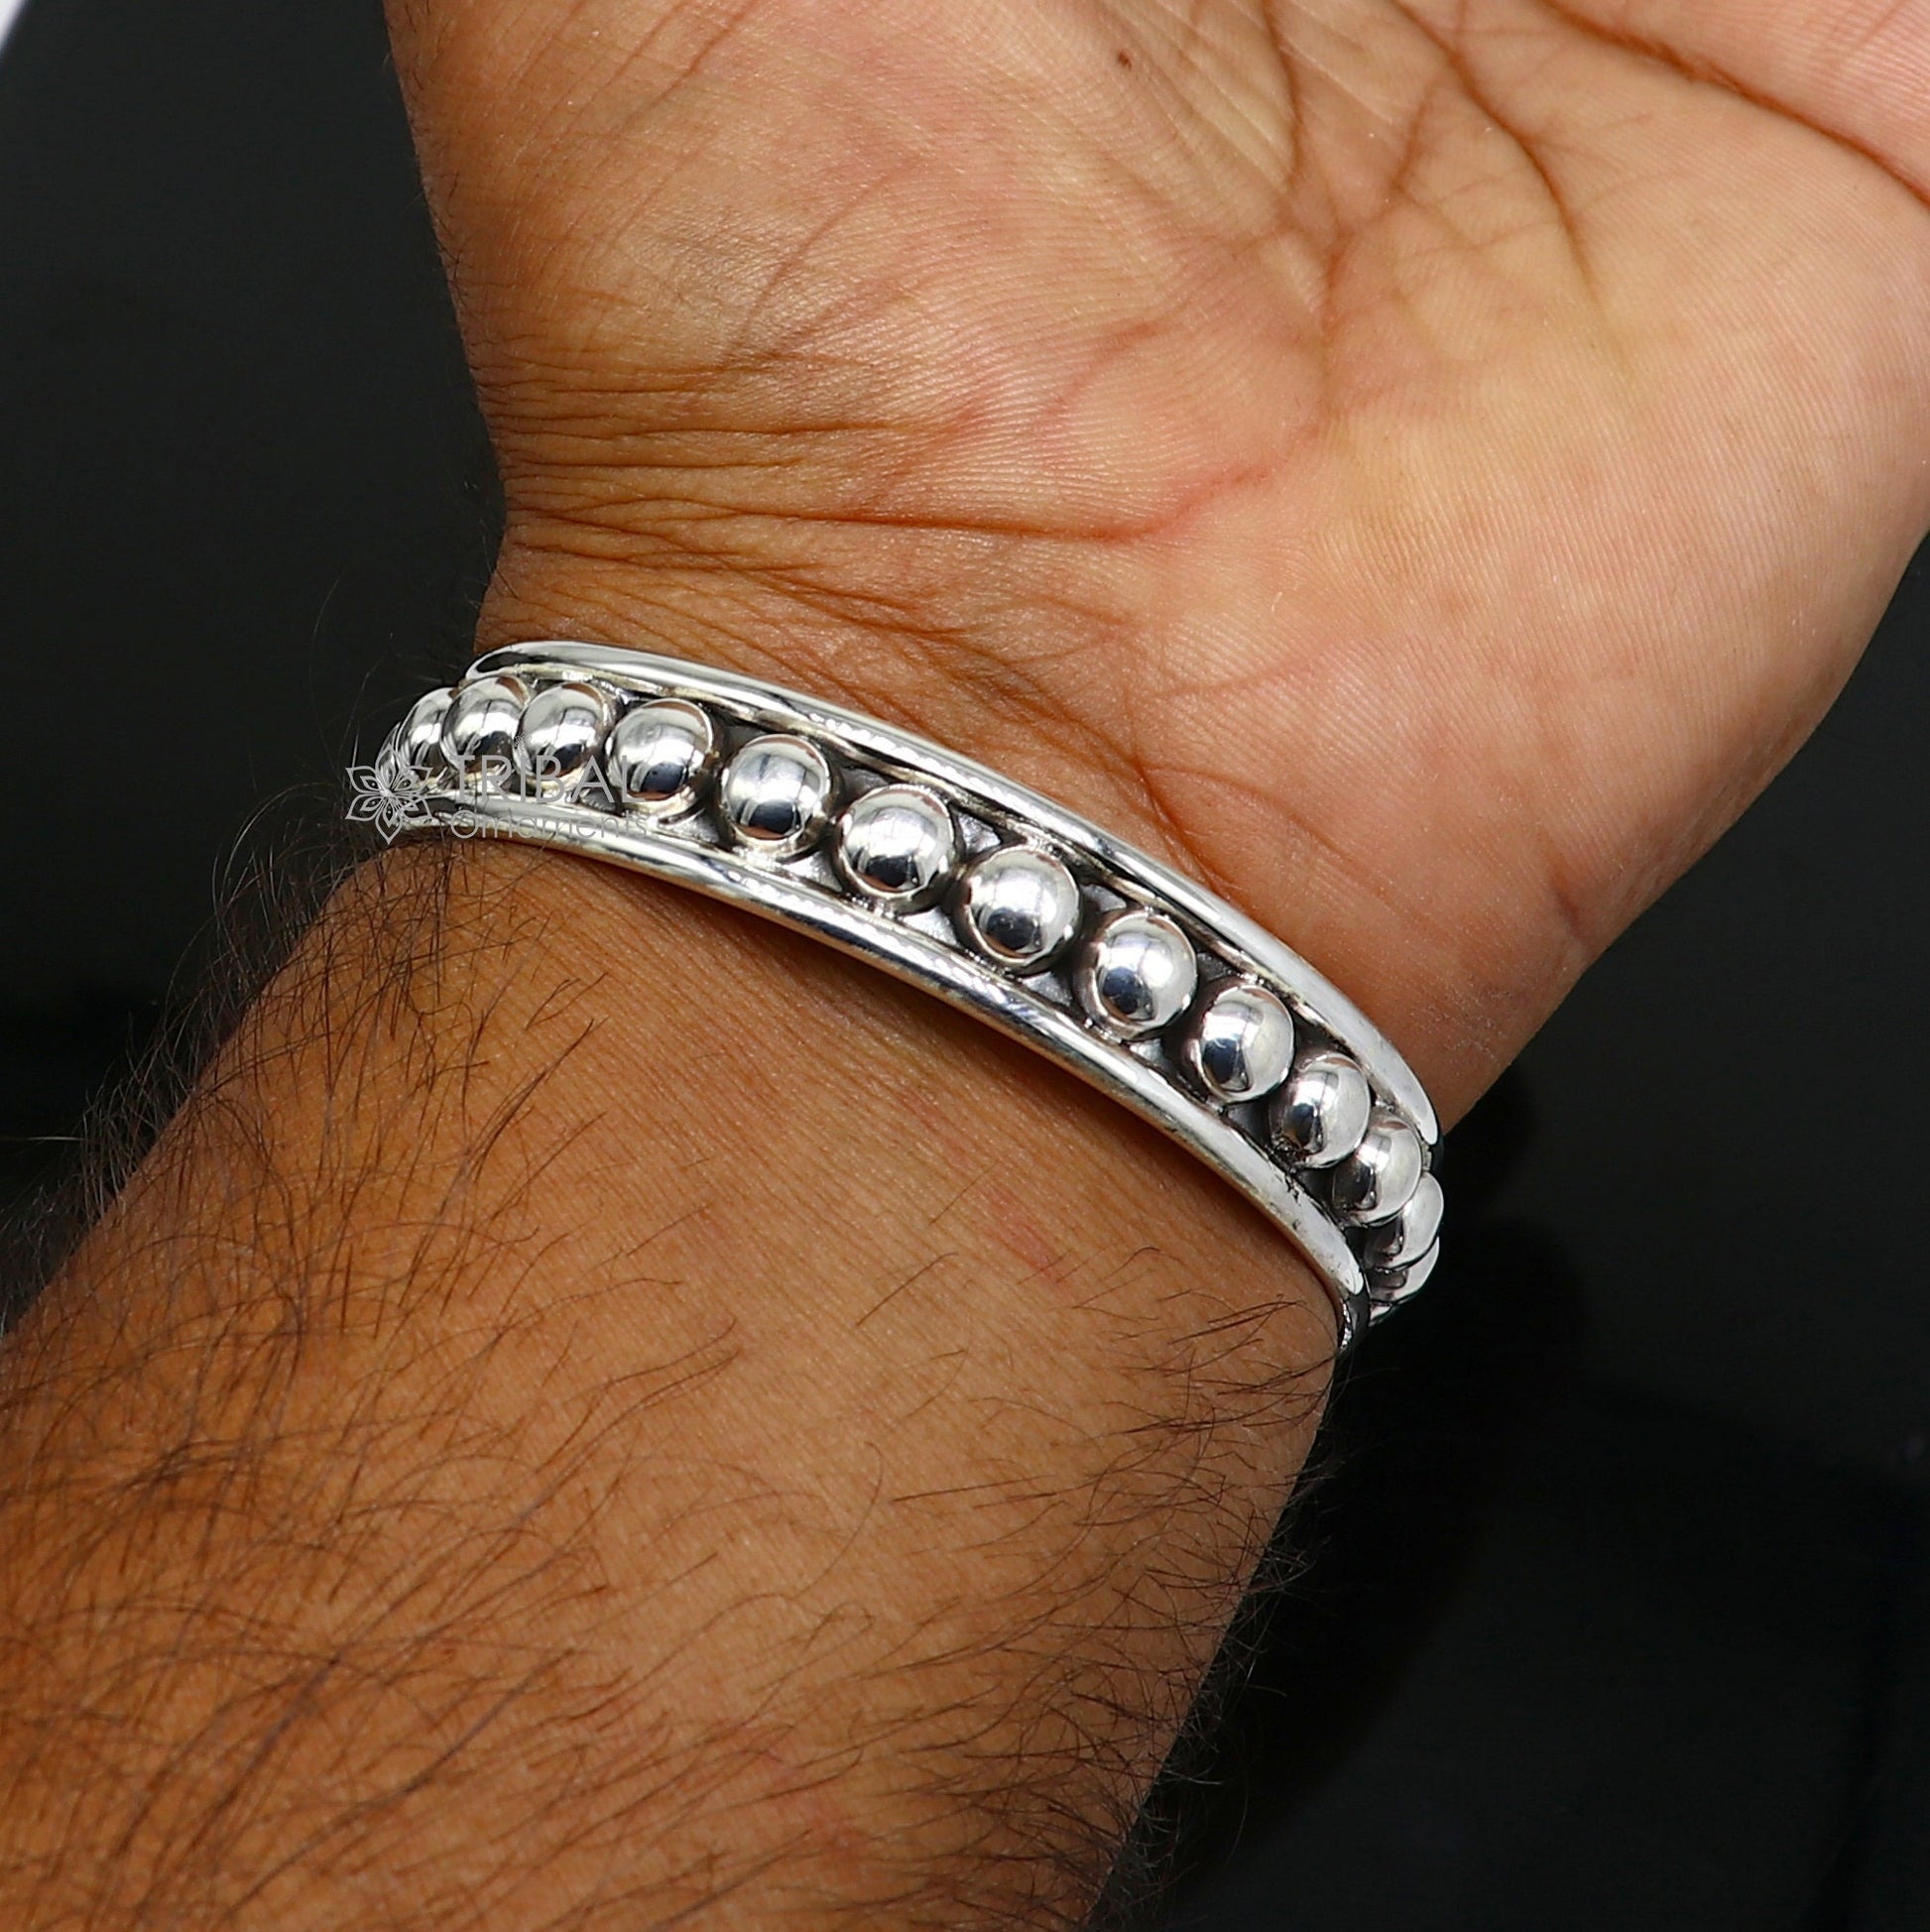 925 sterling silver handmade shiny beaded design bangle bracelet cuff kada, excellent gifting plain bracelet stylish gifting kada cuff175 - TRIBAL ORNAMENTS